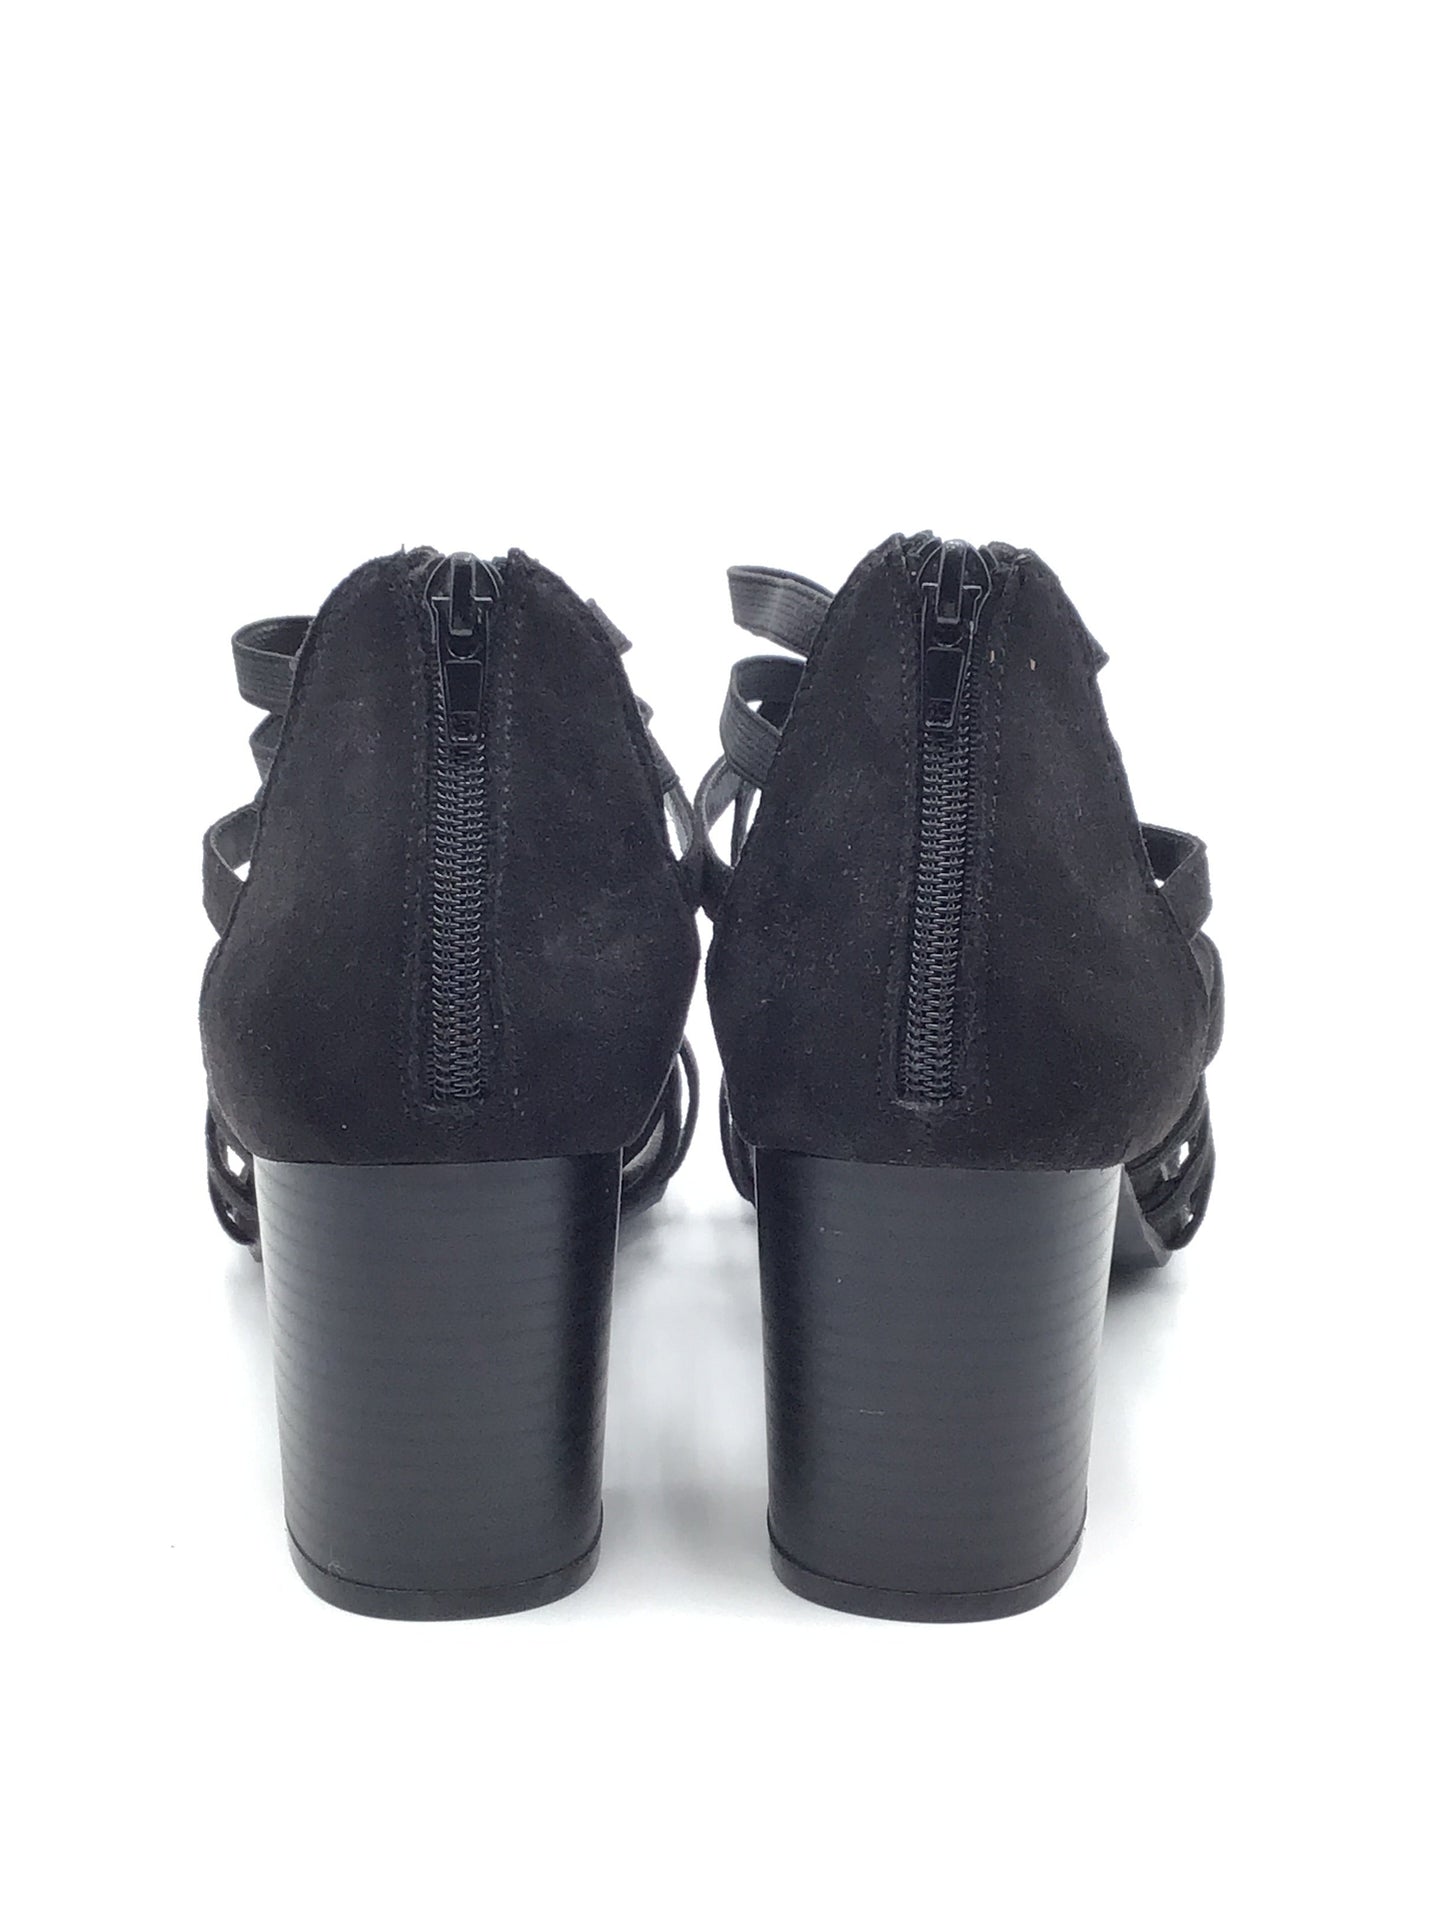 Black Shoes Heels Block Dexflex, Size 12